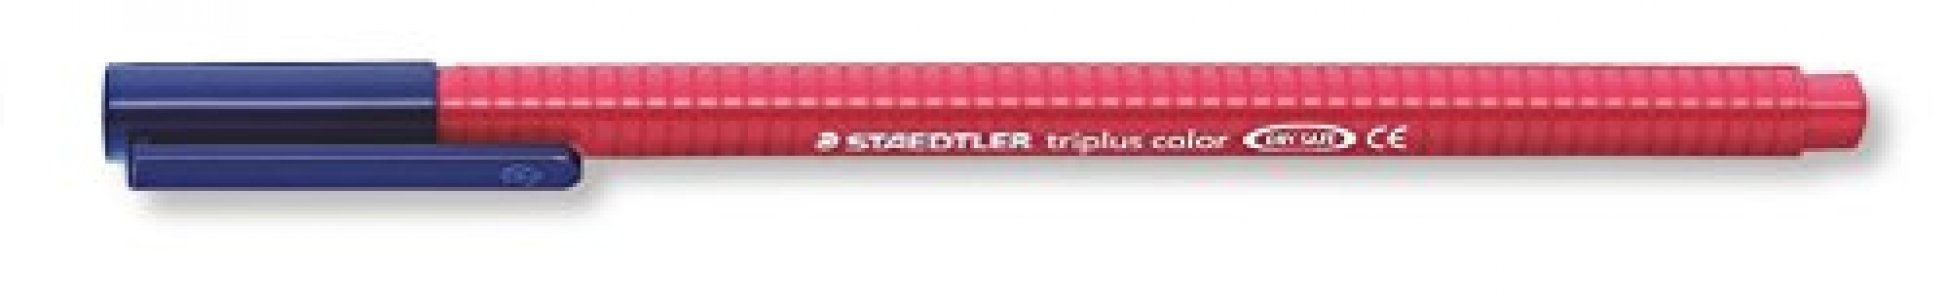 Staedtler 323 Triplus Colour Fibre-Tip Pens, 1.0 mm, Green, Pack of 10